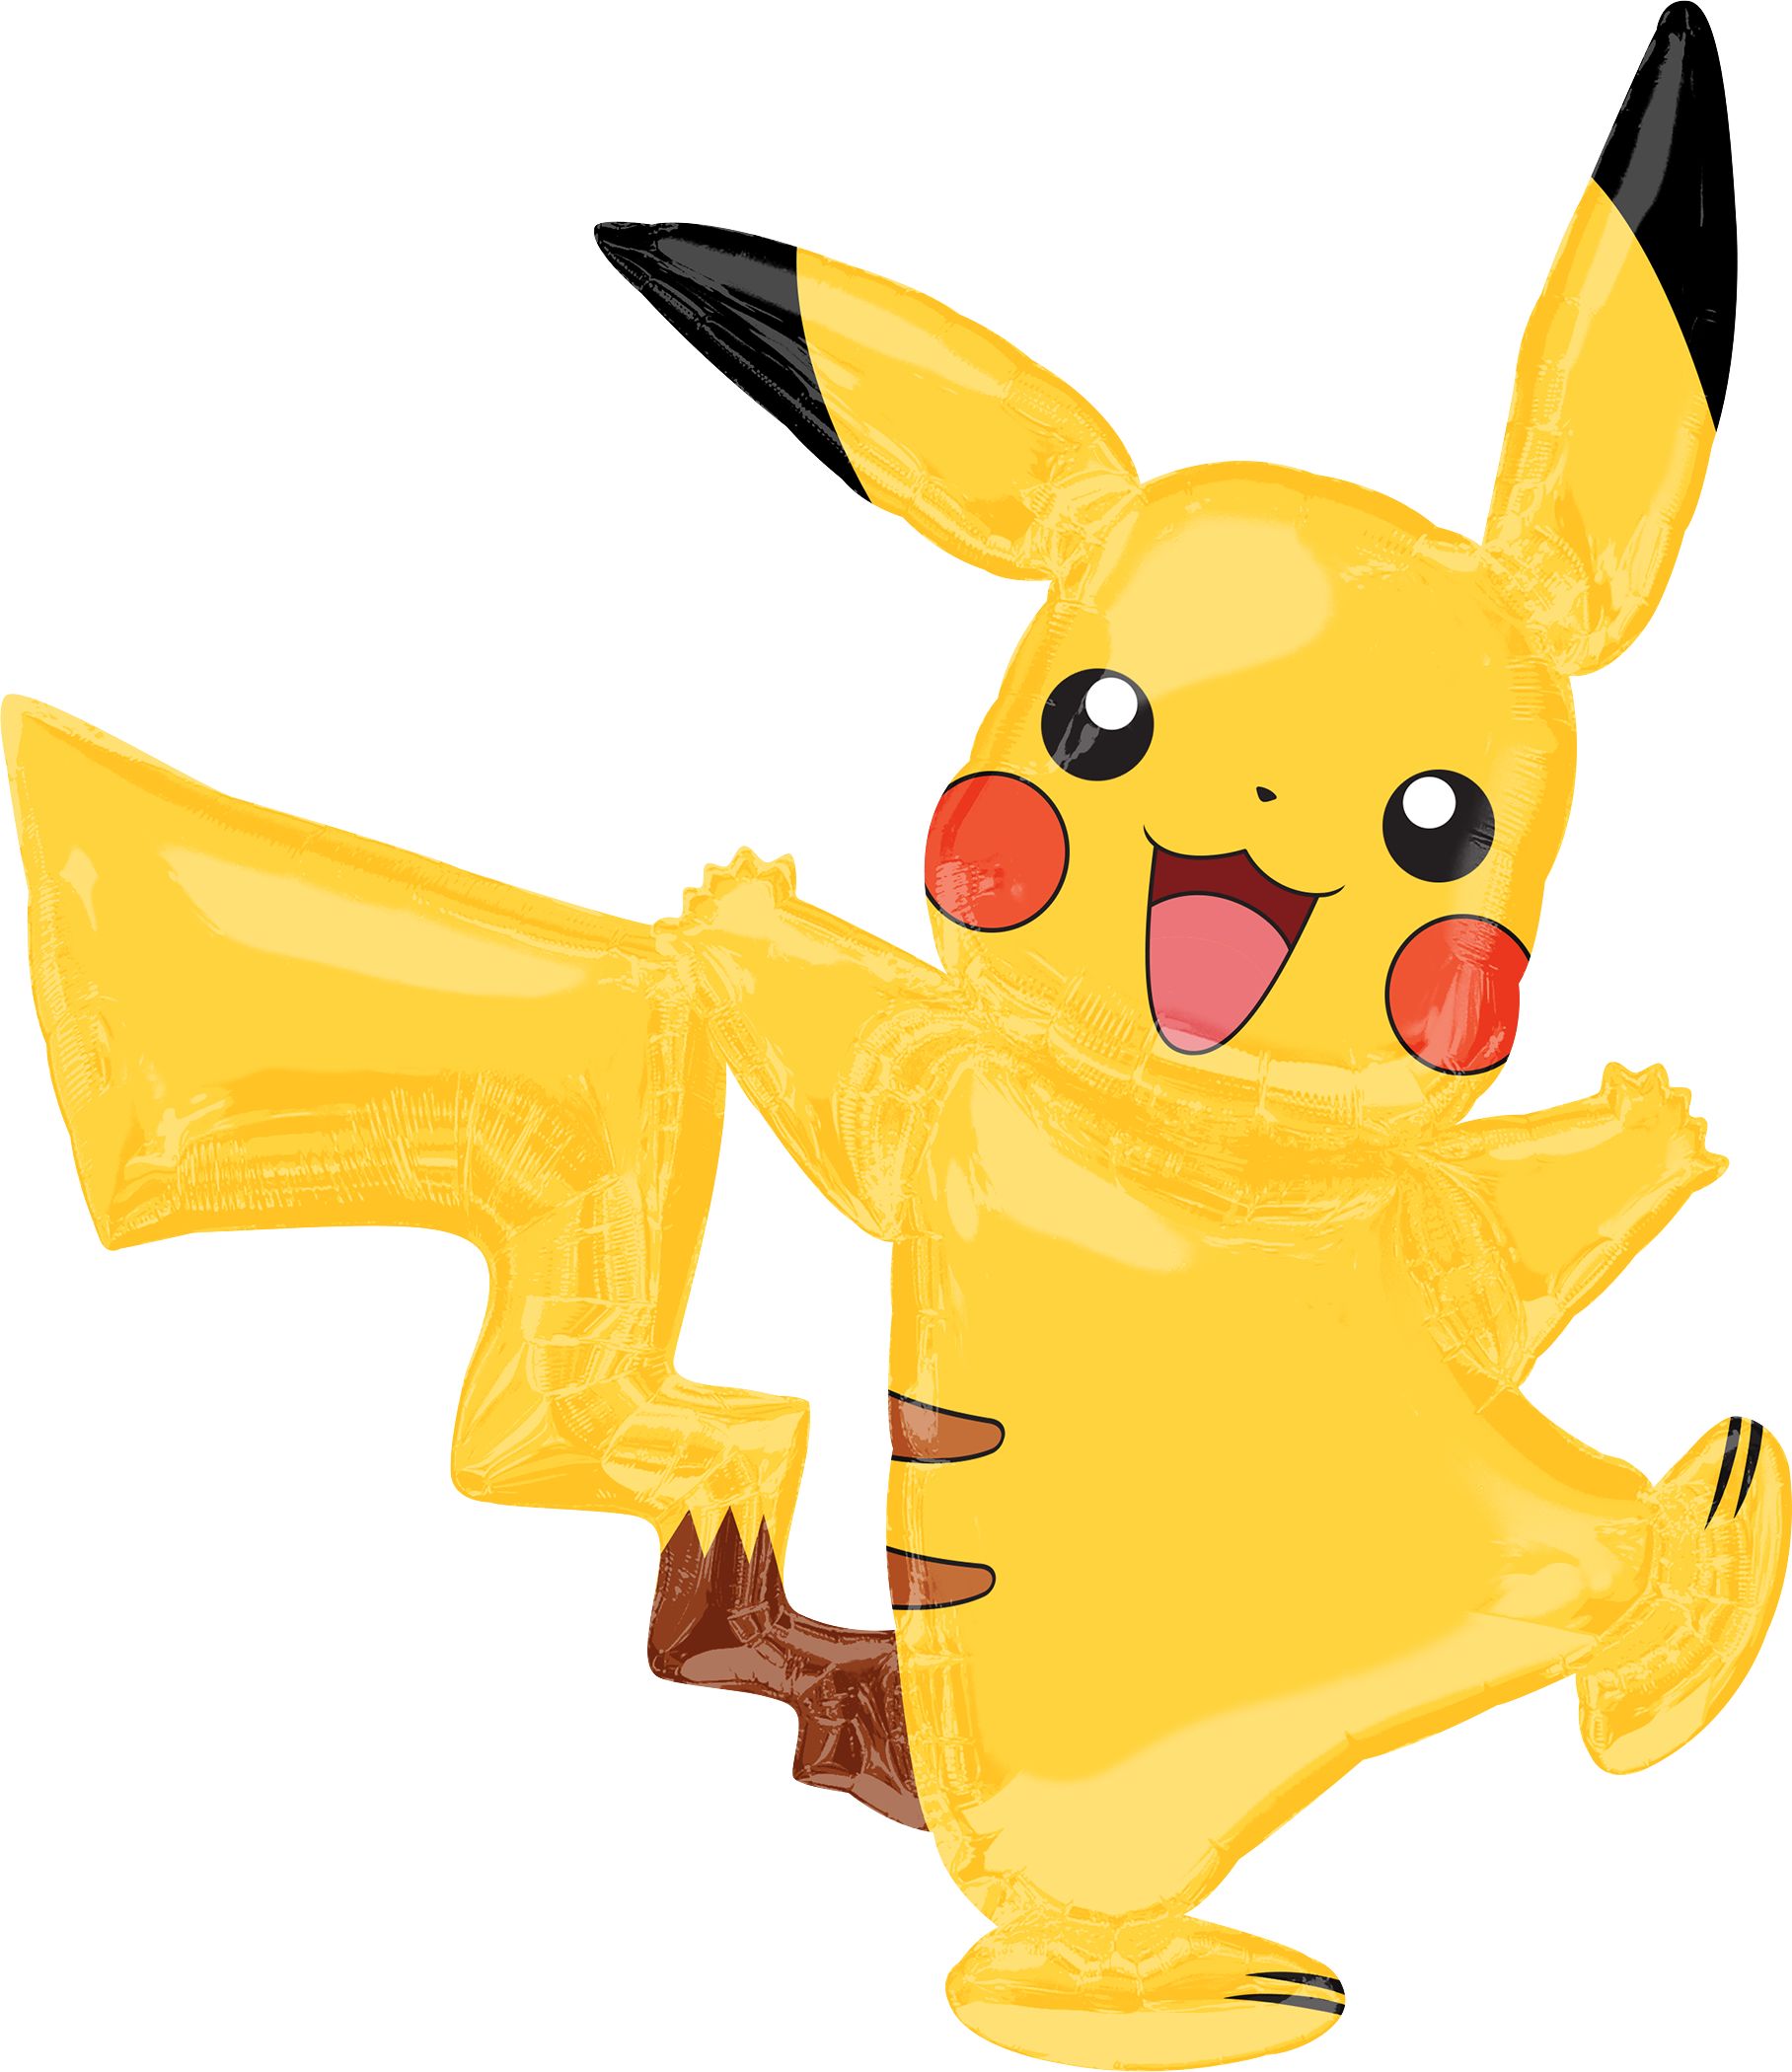 Étoile personnalisée avec ballon Pokémon Super Pikachu – Helium Balloon Inc.